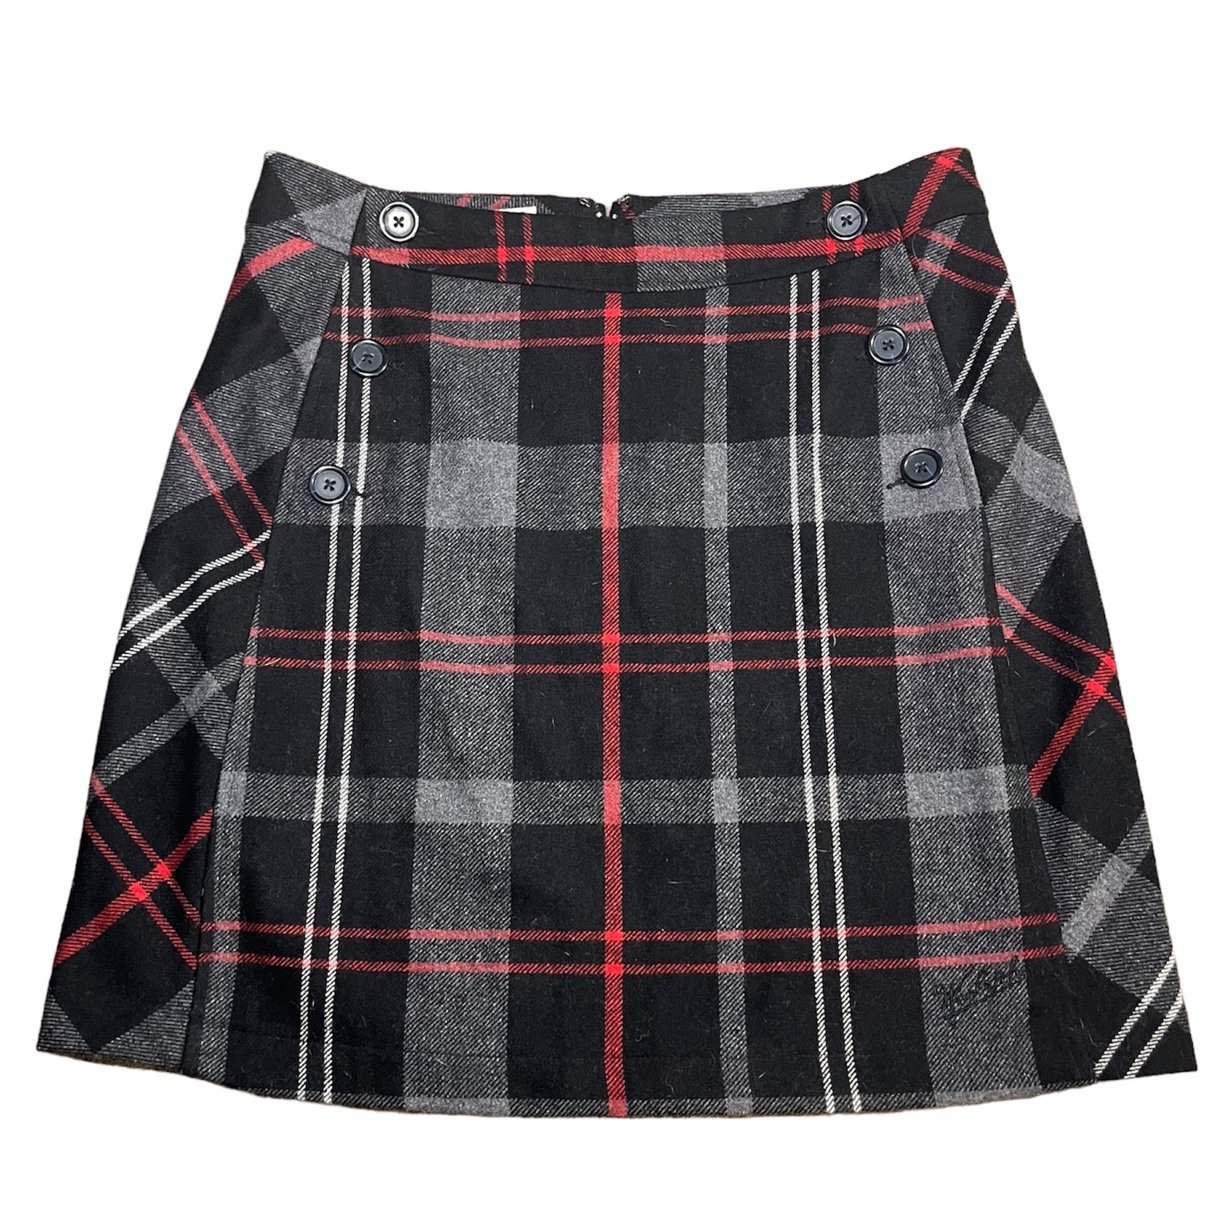 Cheap Wool black plaid Skirt FKuHubujO Online Shop